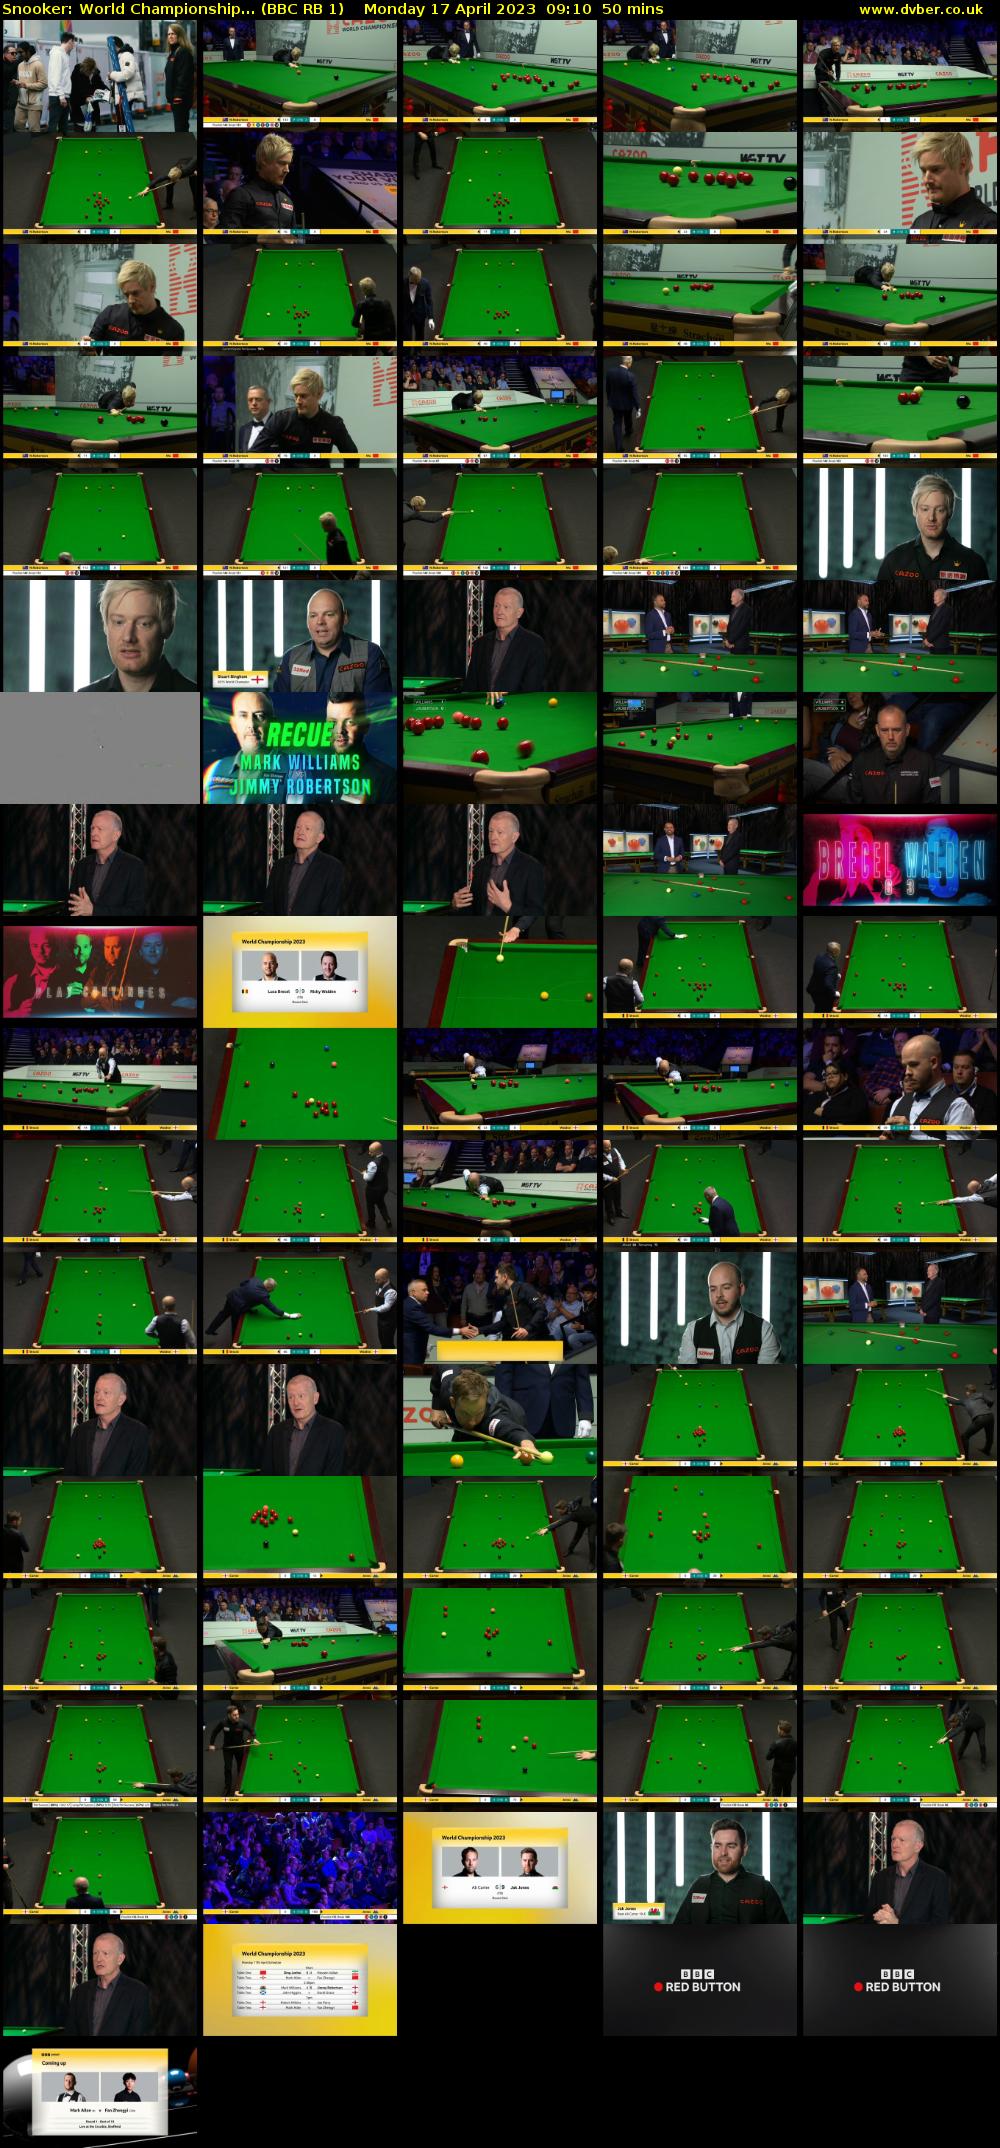 Snooker: World Championship... (BBC RB 1) Monday 17 April 2023 09:10 - 10:00